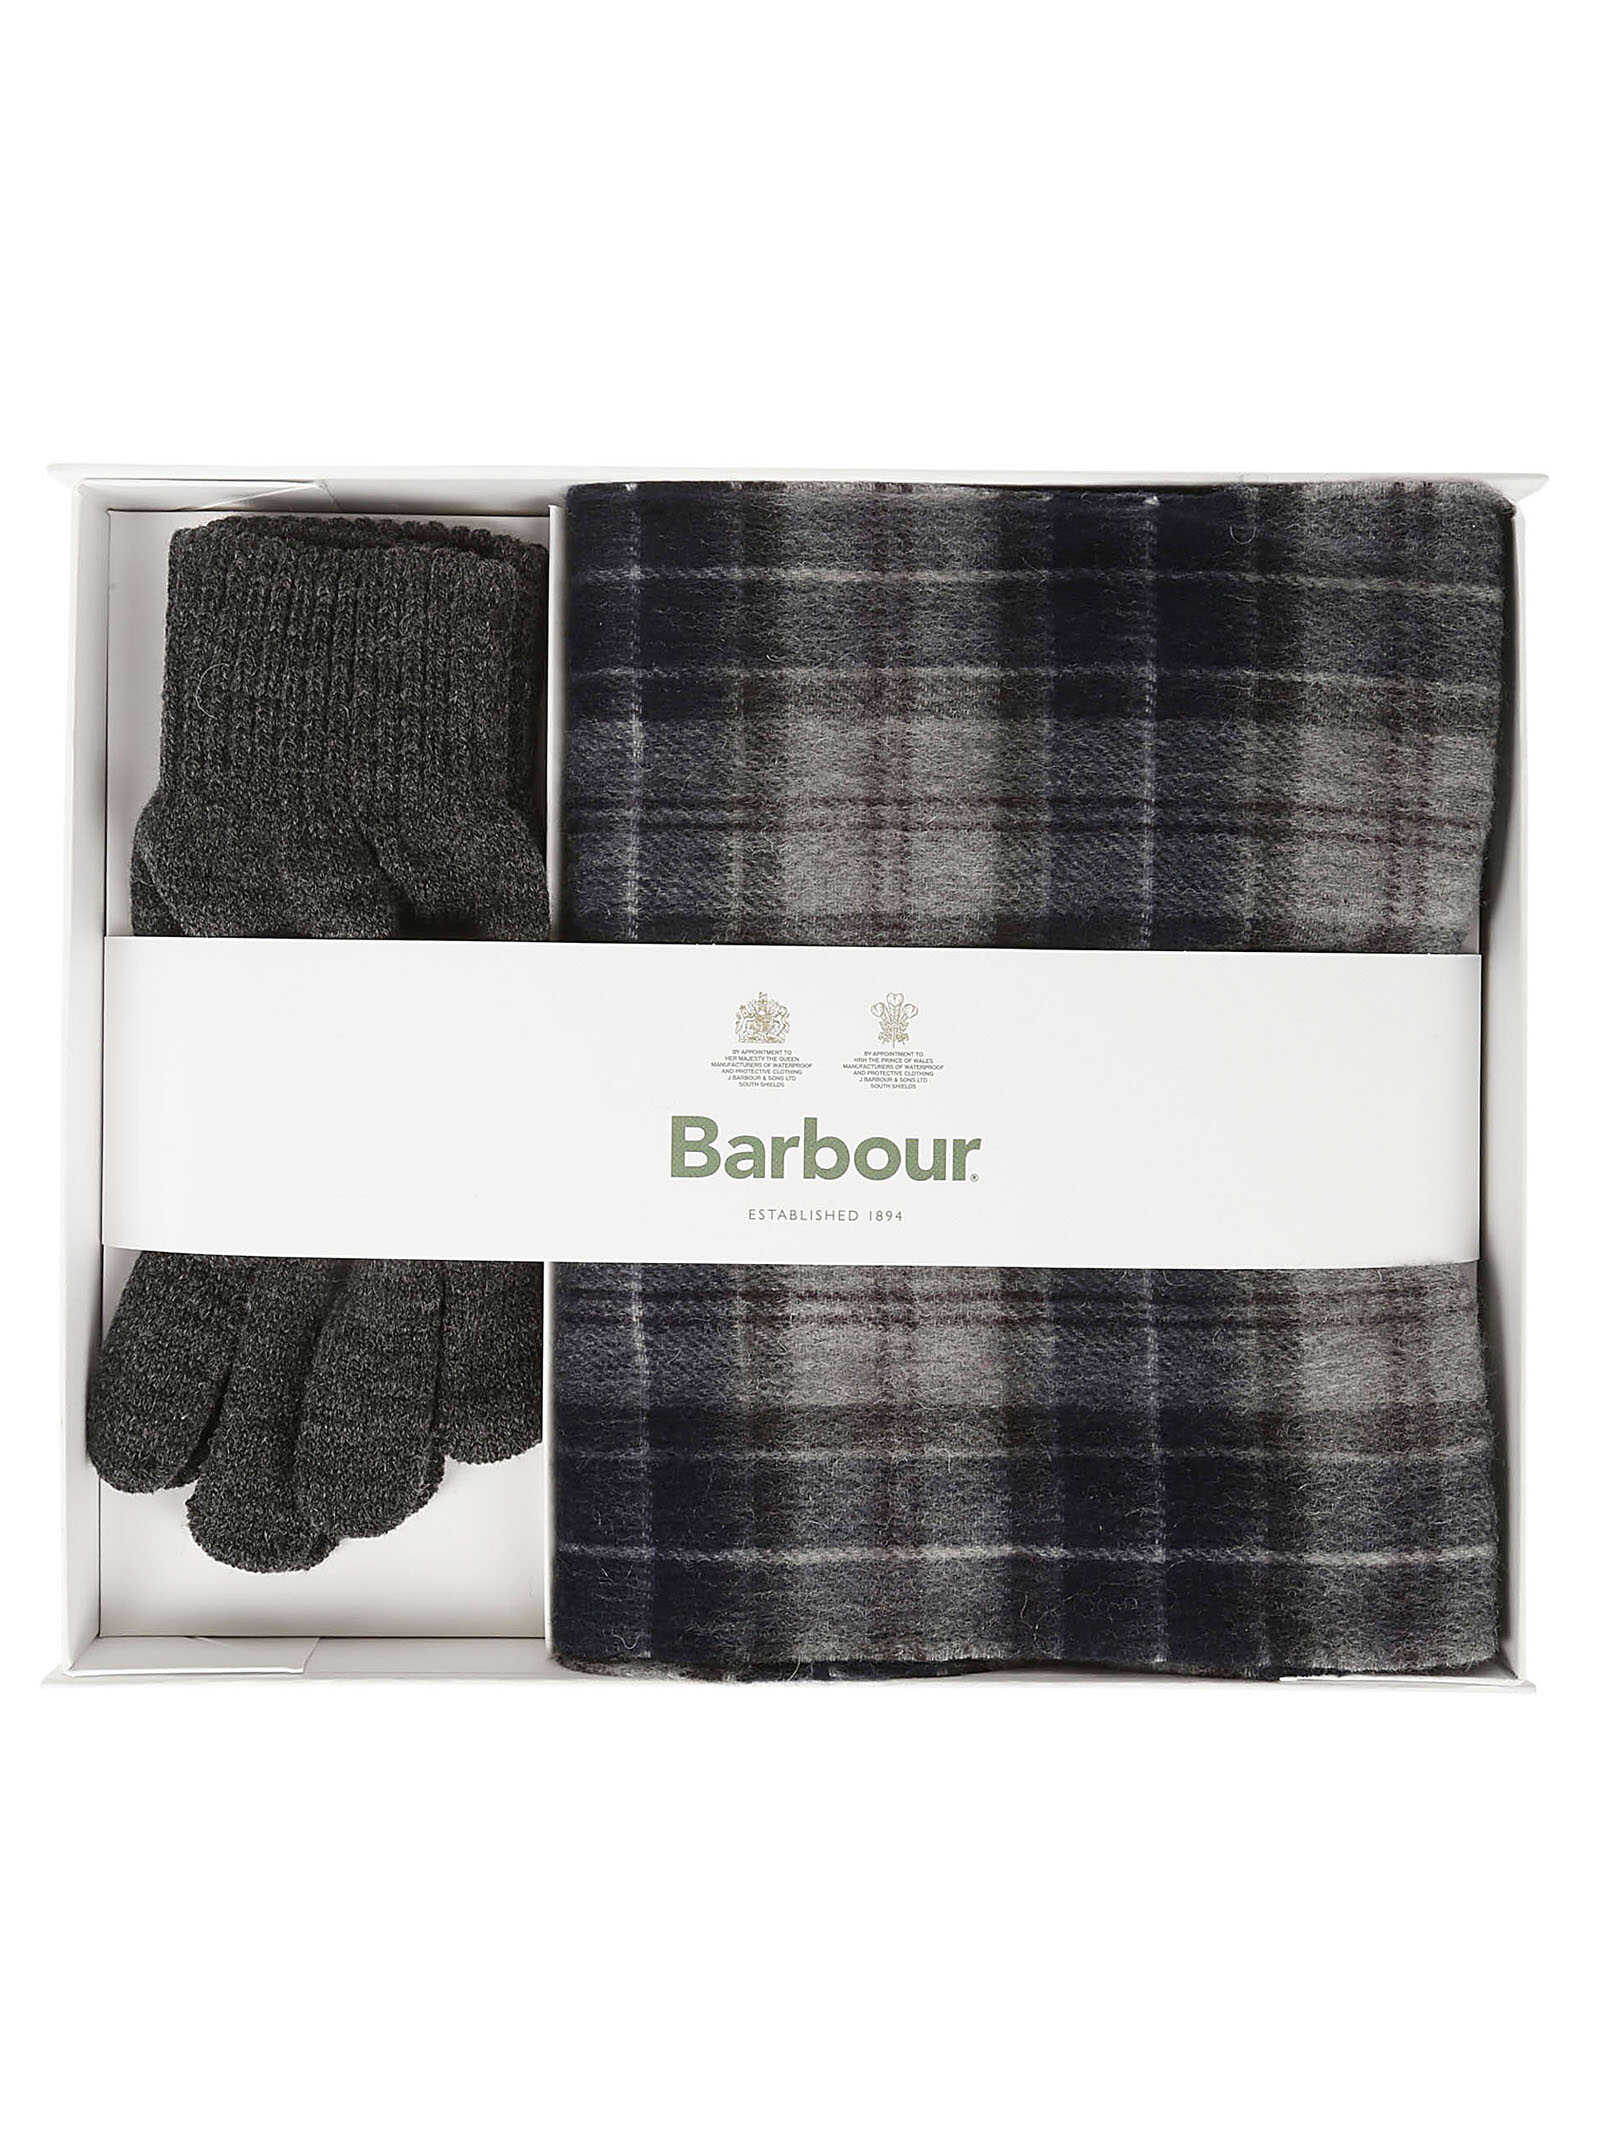 Barbour BARBOUR gift box MGS0018.MGS TN63 AUTUMN DRESS Tn Black Slate Tartan